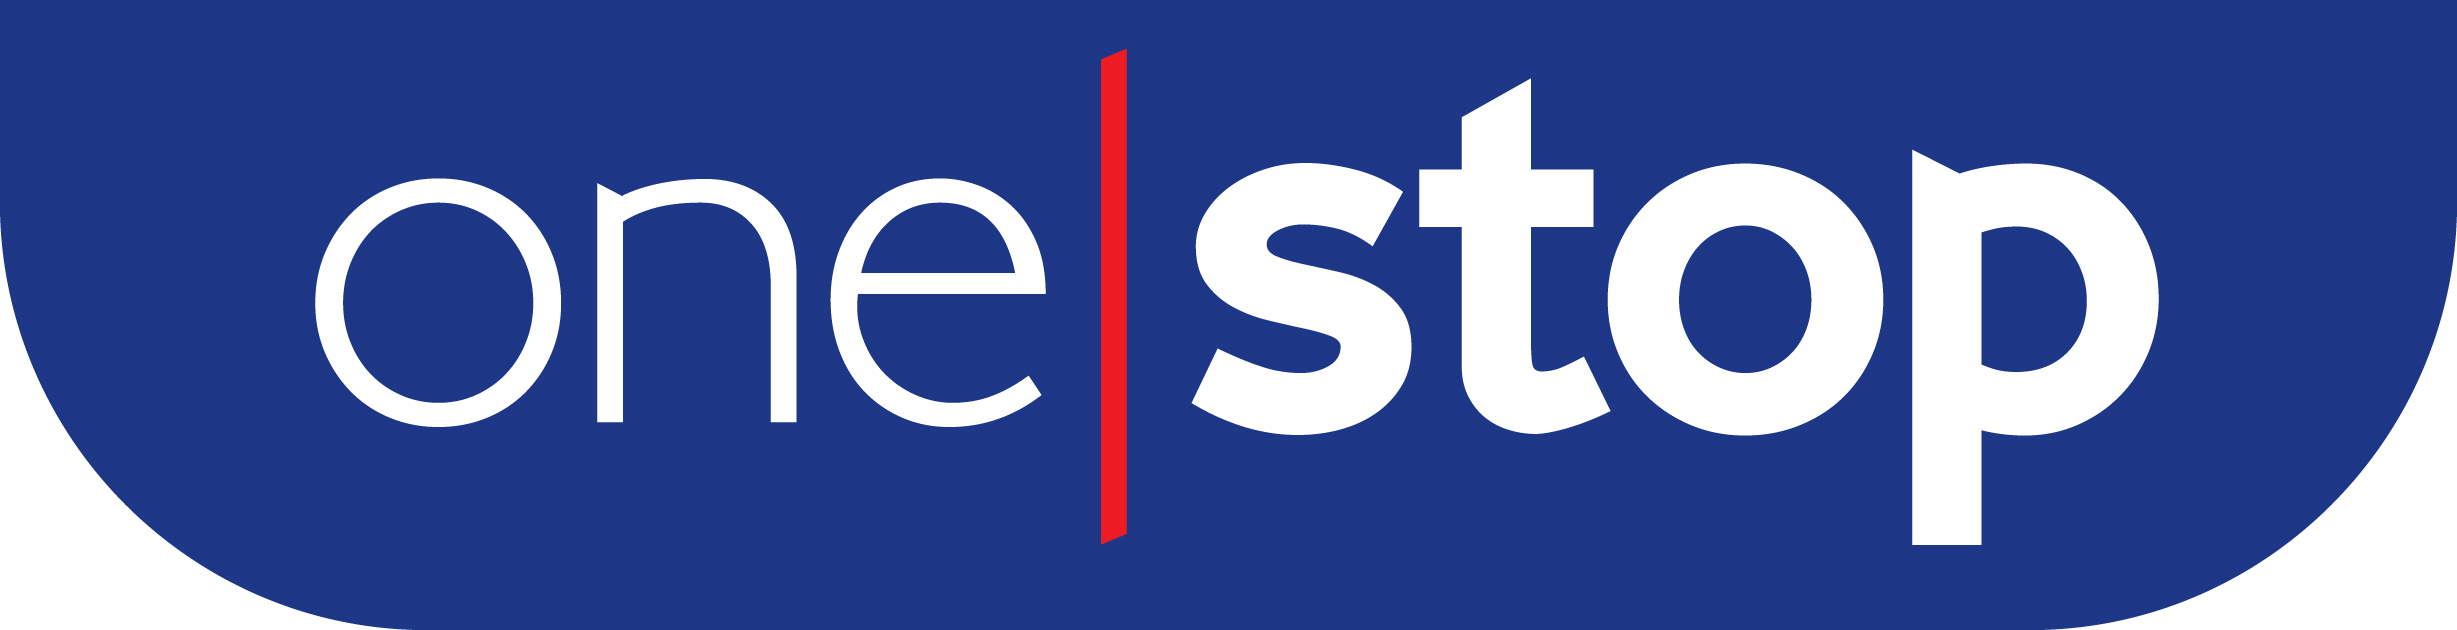 One Stop Brand Logo